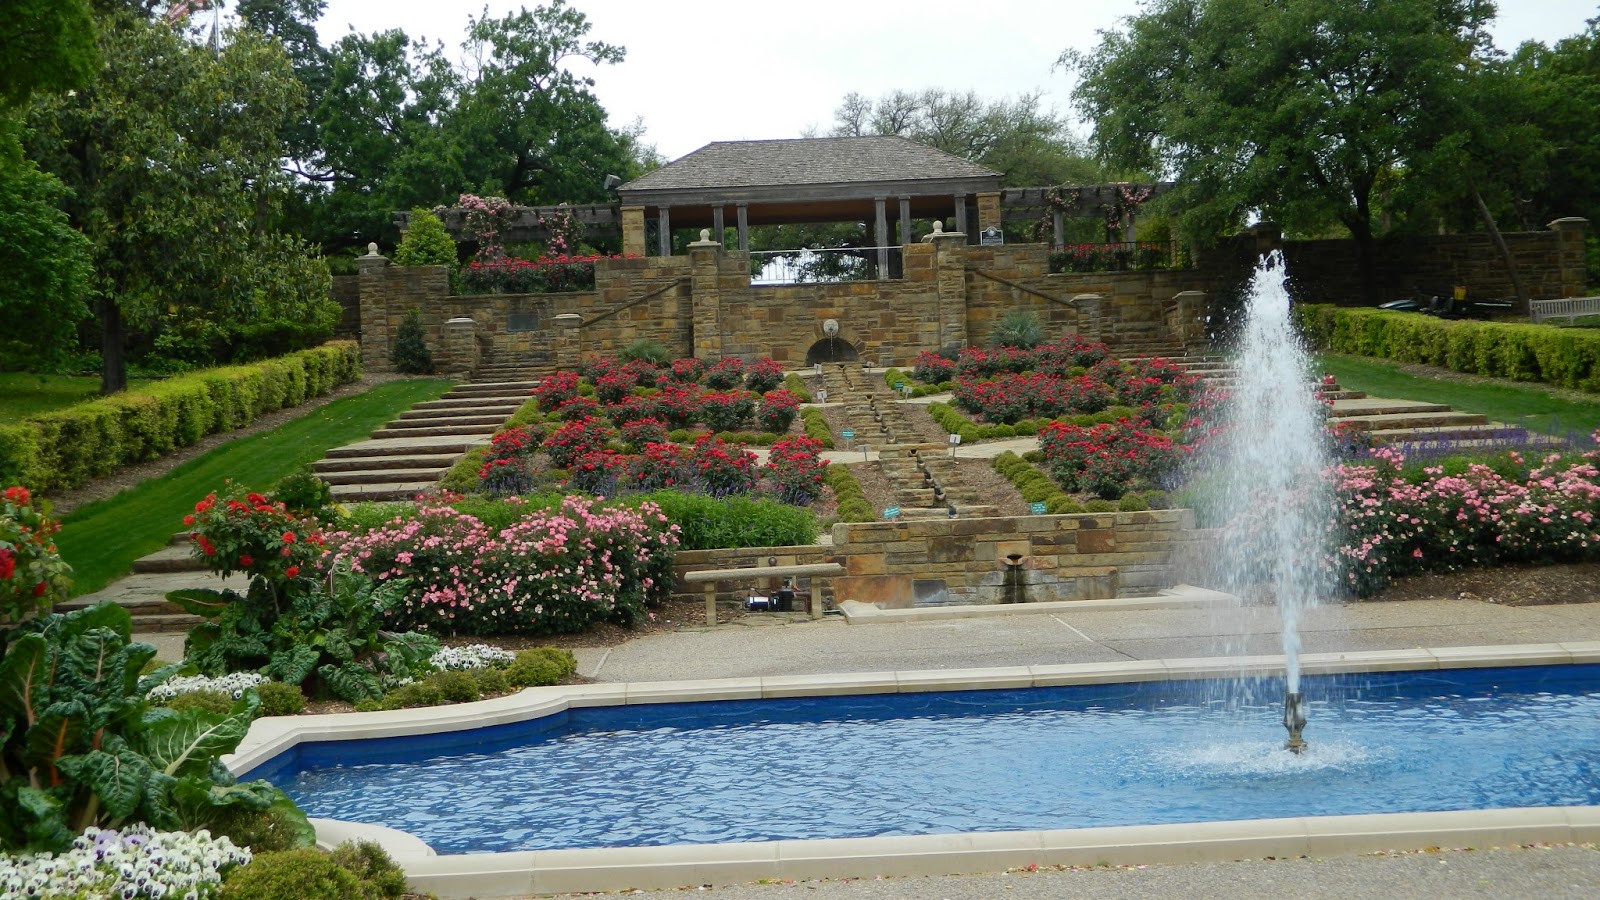 GardenEnvy: This Texas Botanical Garden Is So Worth A Visit